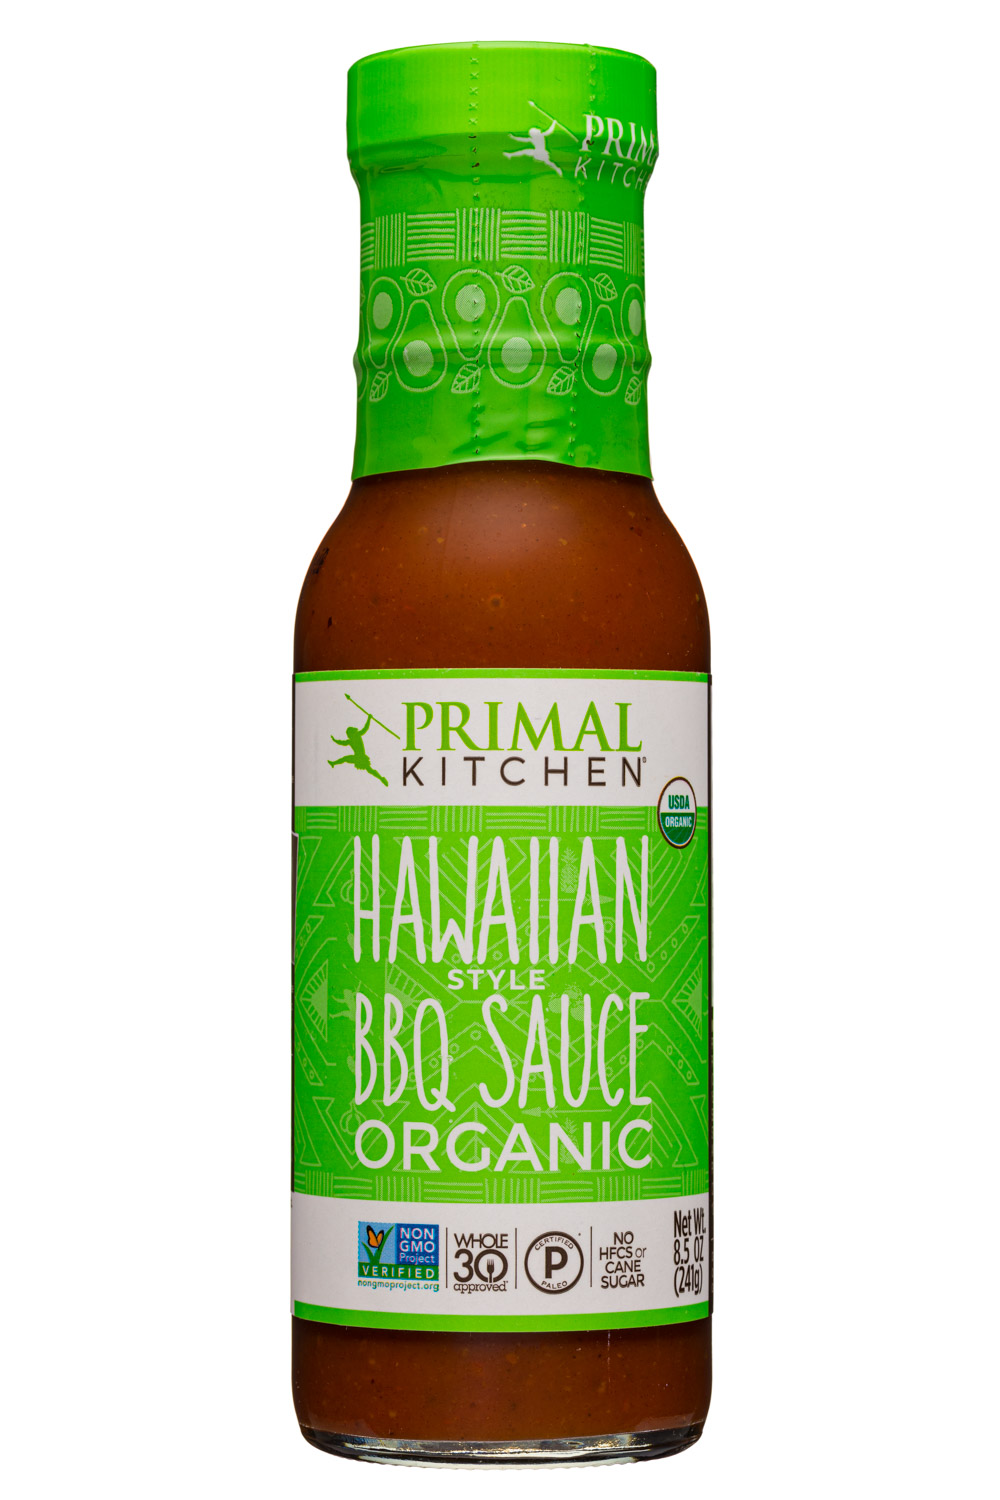 Baker's - Primal Kitchen Organic Hawaiian Style BBQ Sauce, 8.5 oz